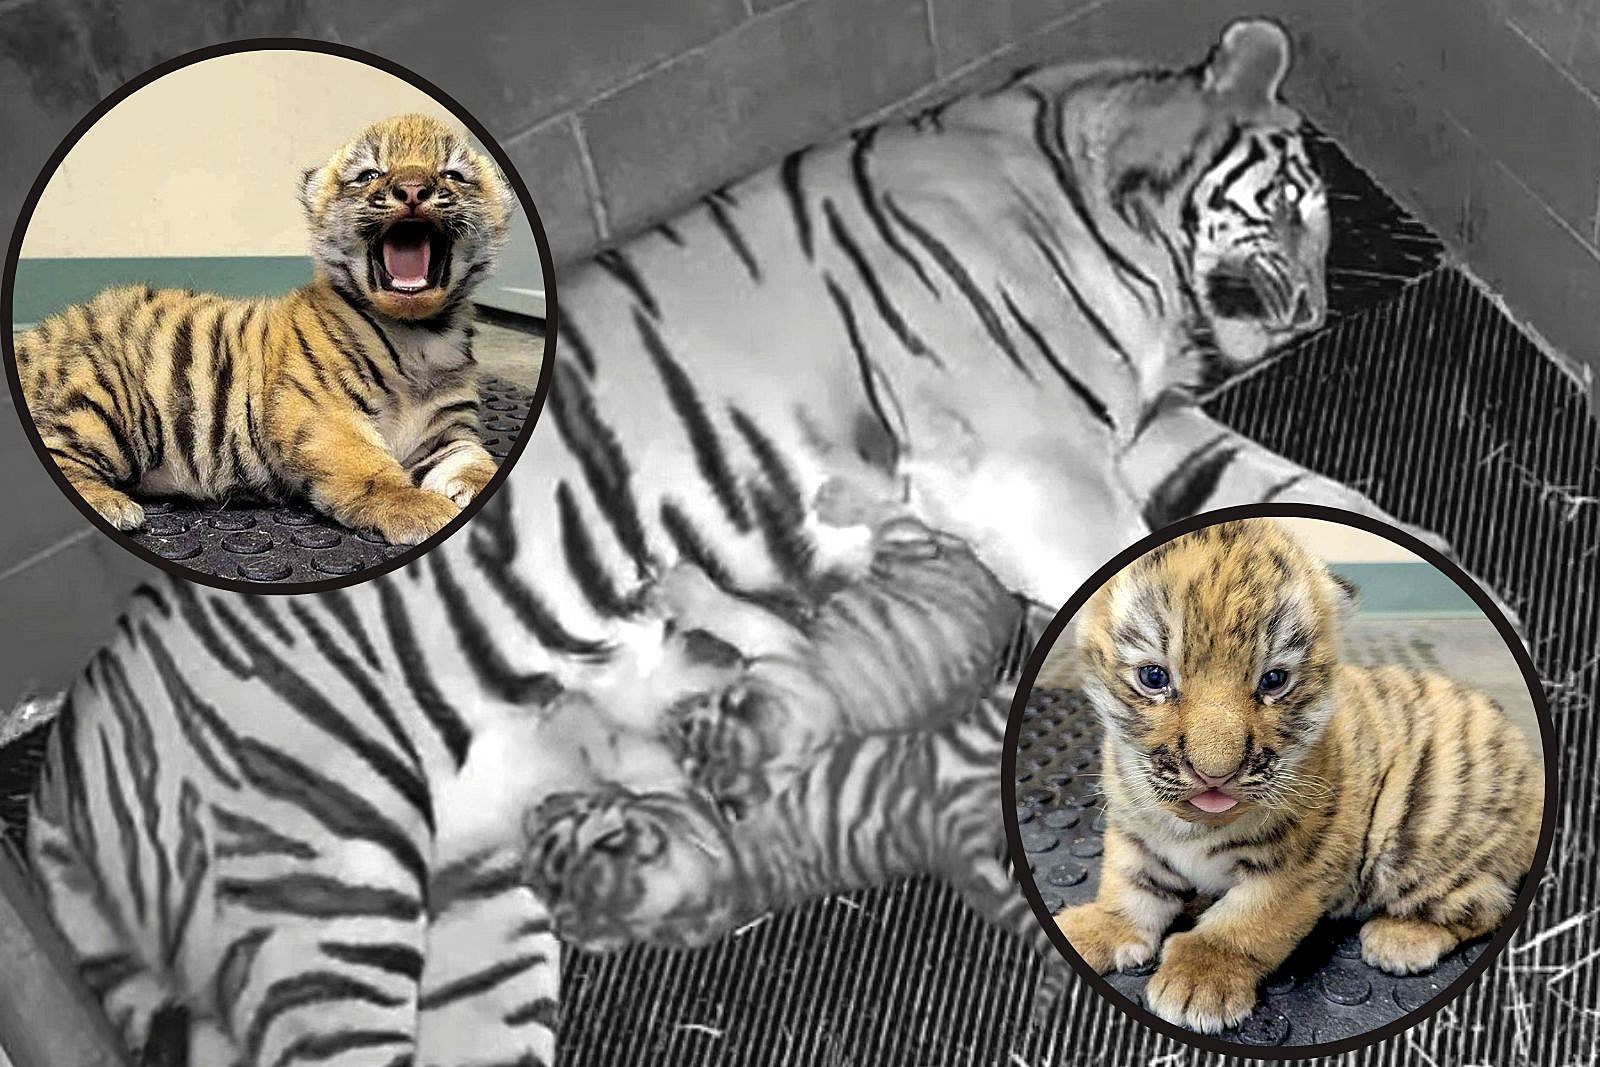 How An Actual Tiger Mother Raises Her Cubs